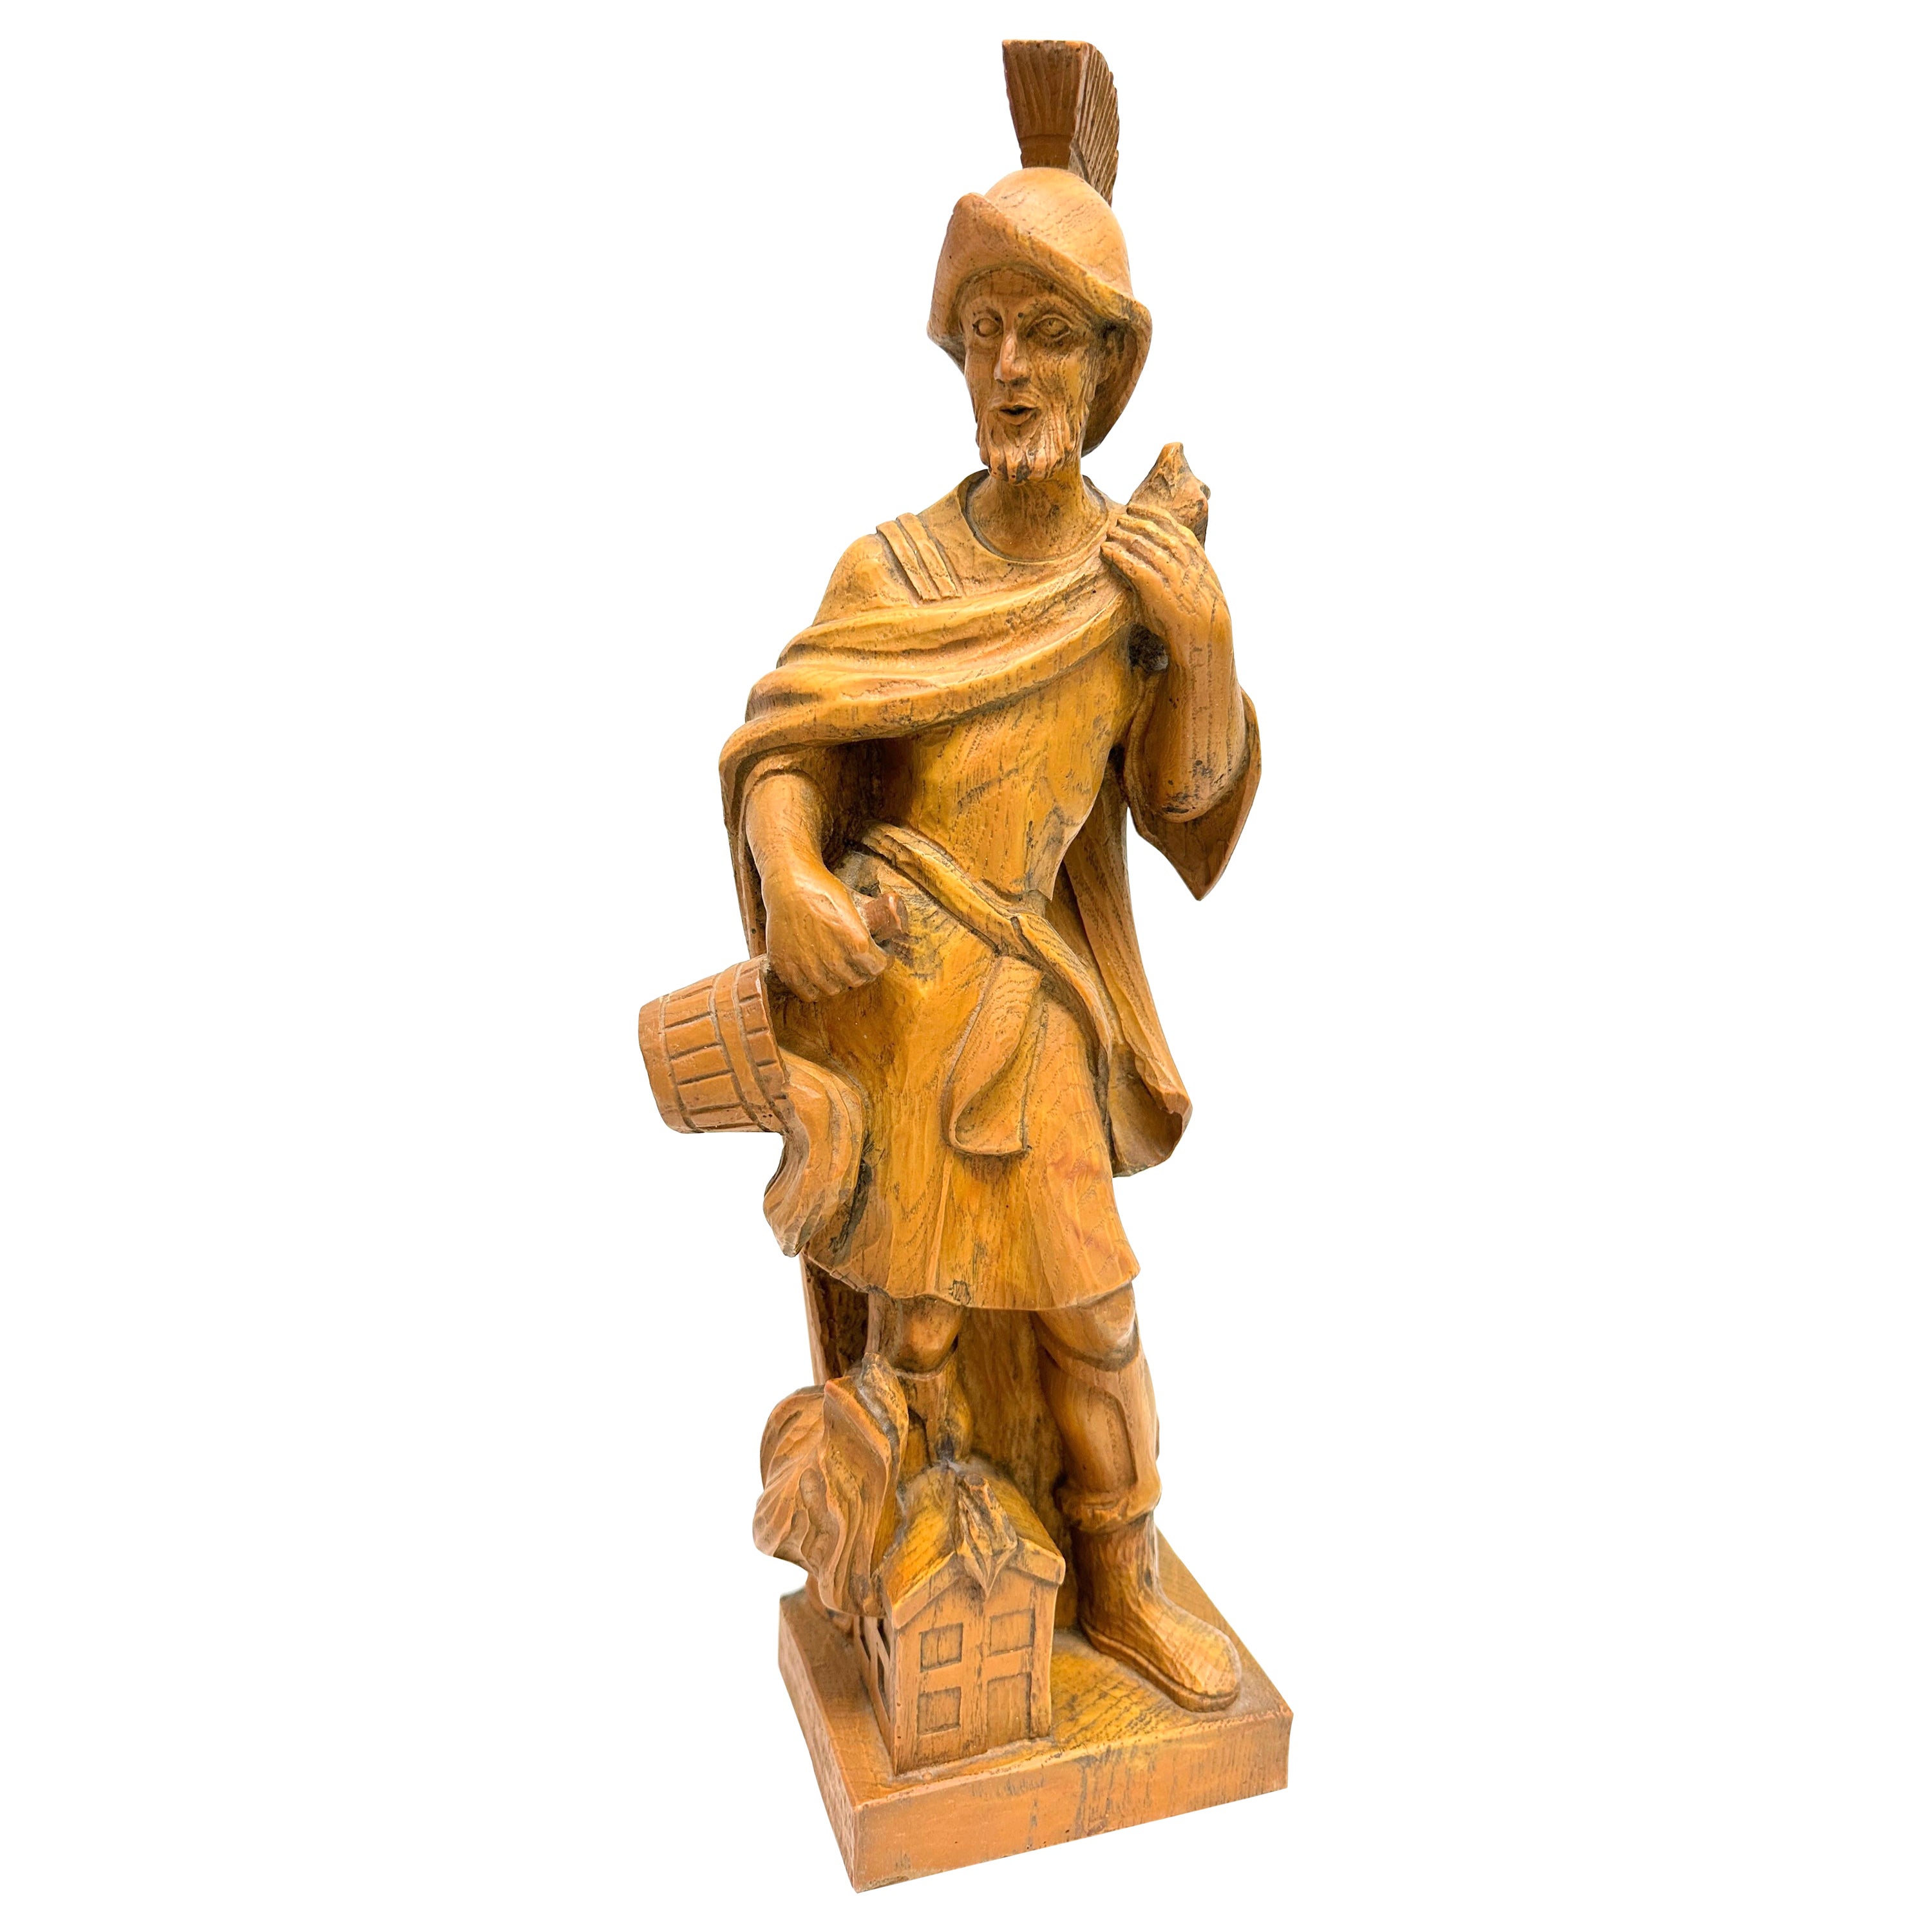 Folk Art 20th Century Carved Wood Figure Sculpture of Saint Florian Austria 1960